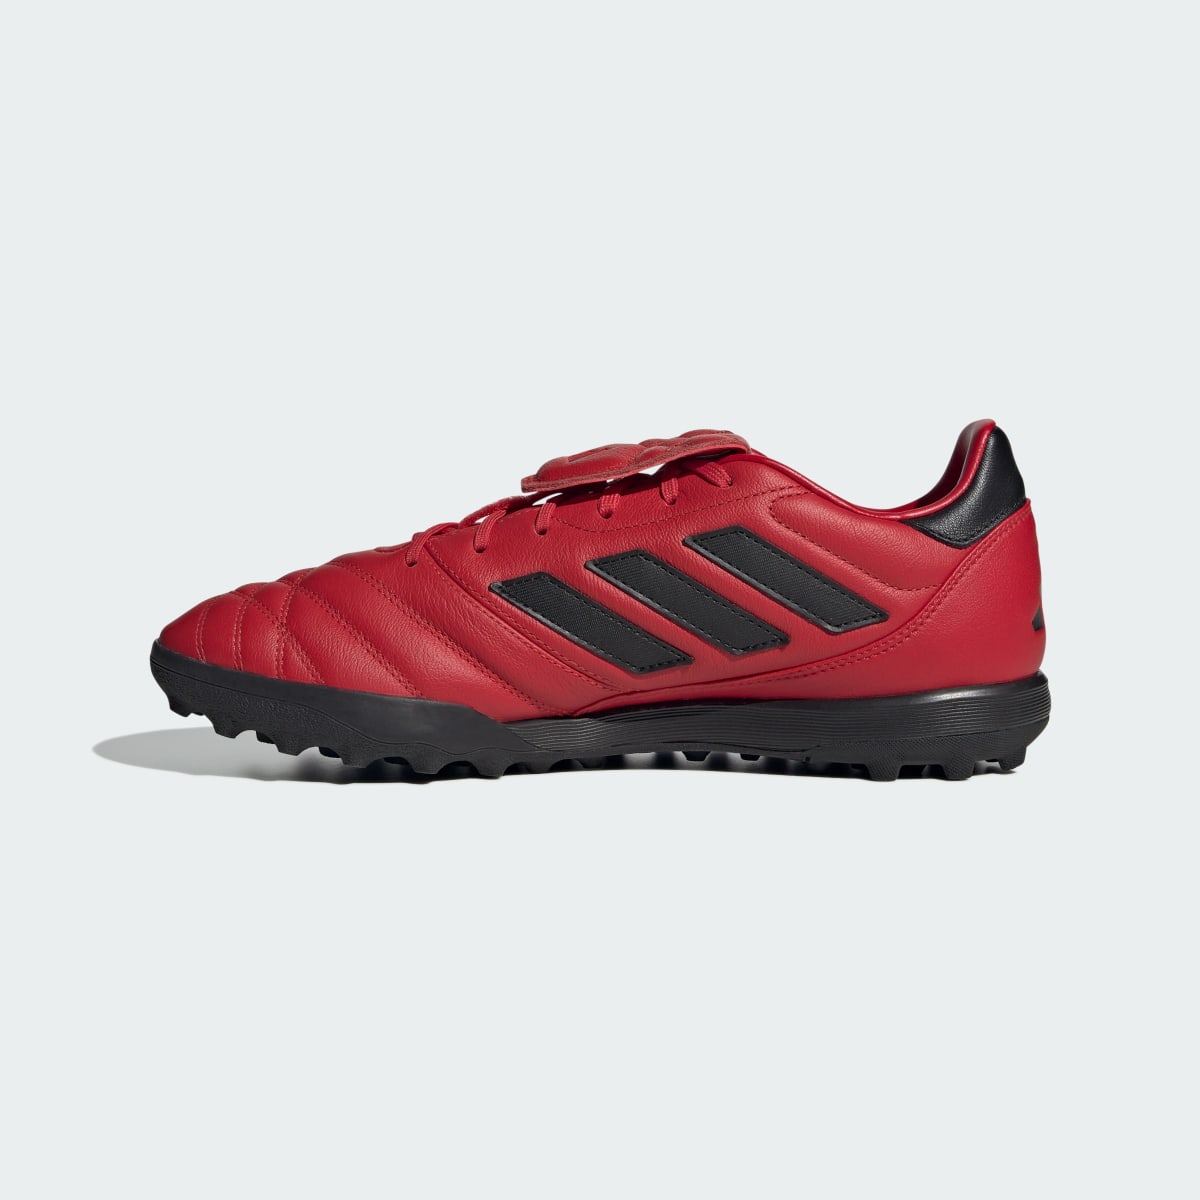 Adidas Copa Gloro Turf Boots. 7